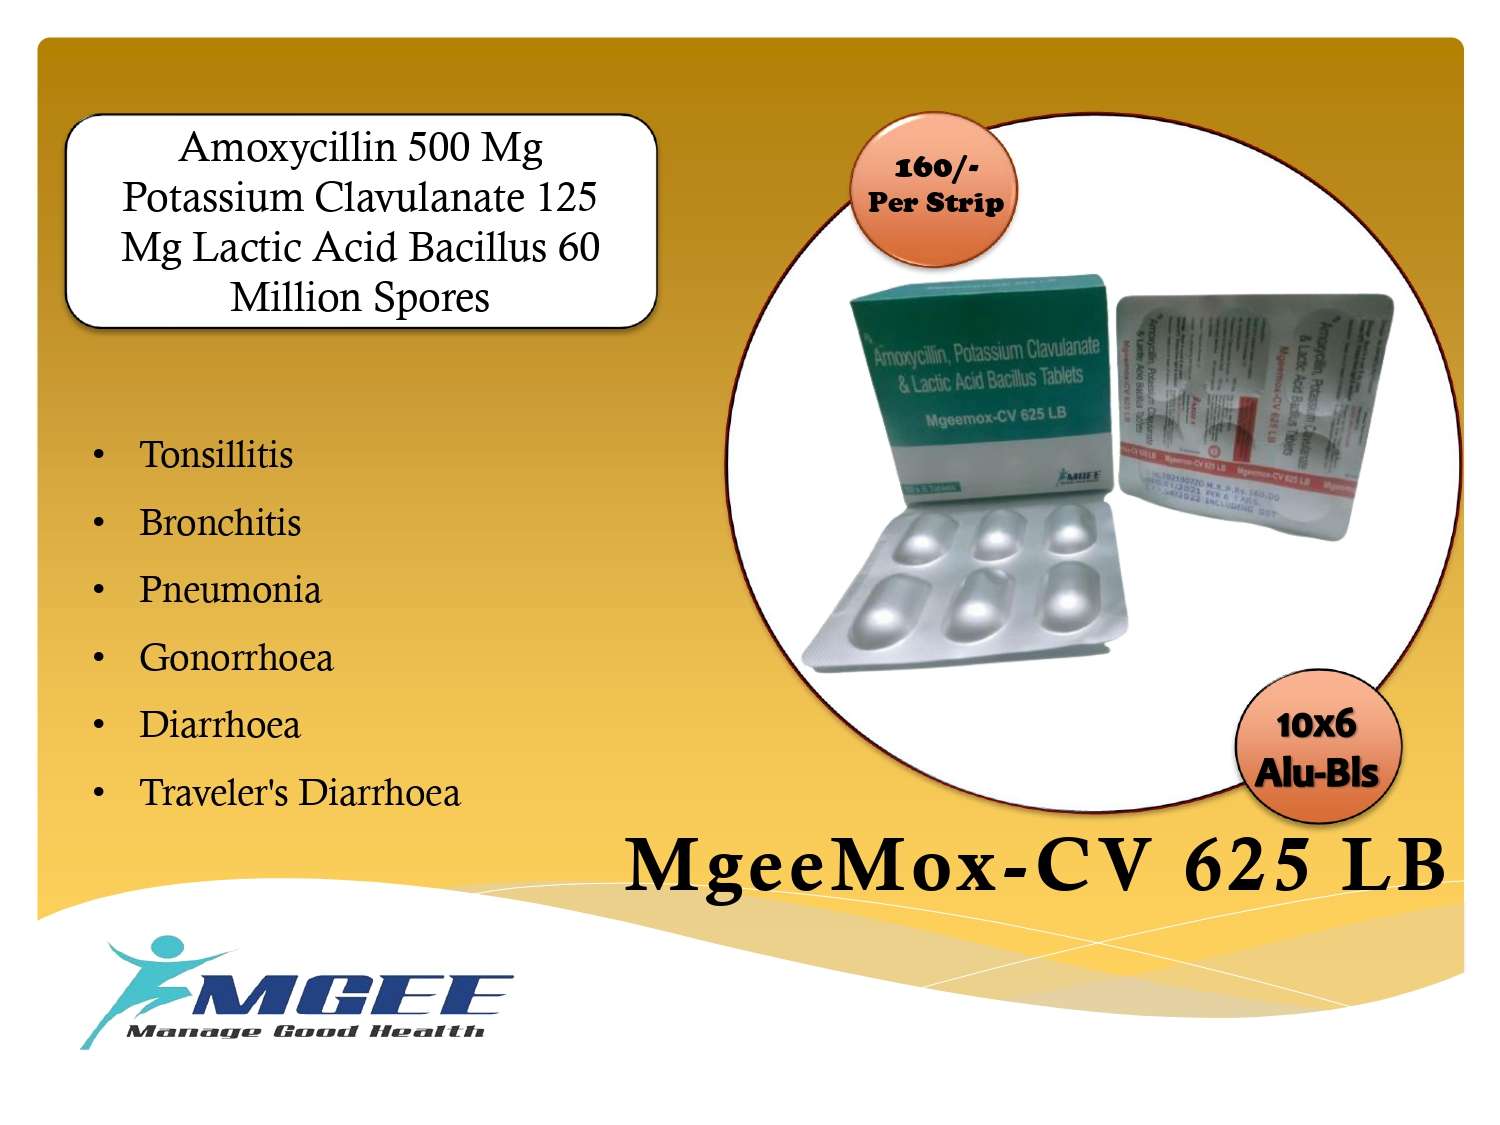 amoxicillin 500mg + potassium clavulanate 125mg + lactic acid
bacillus 60 million spores